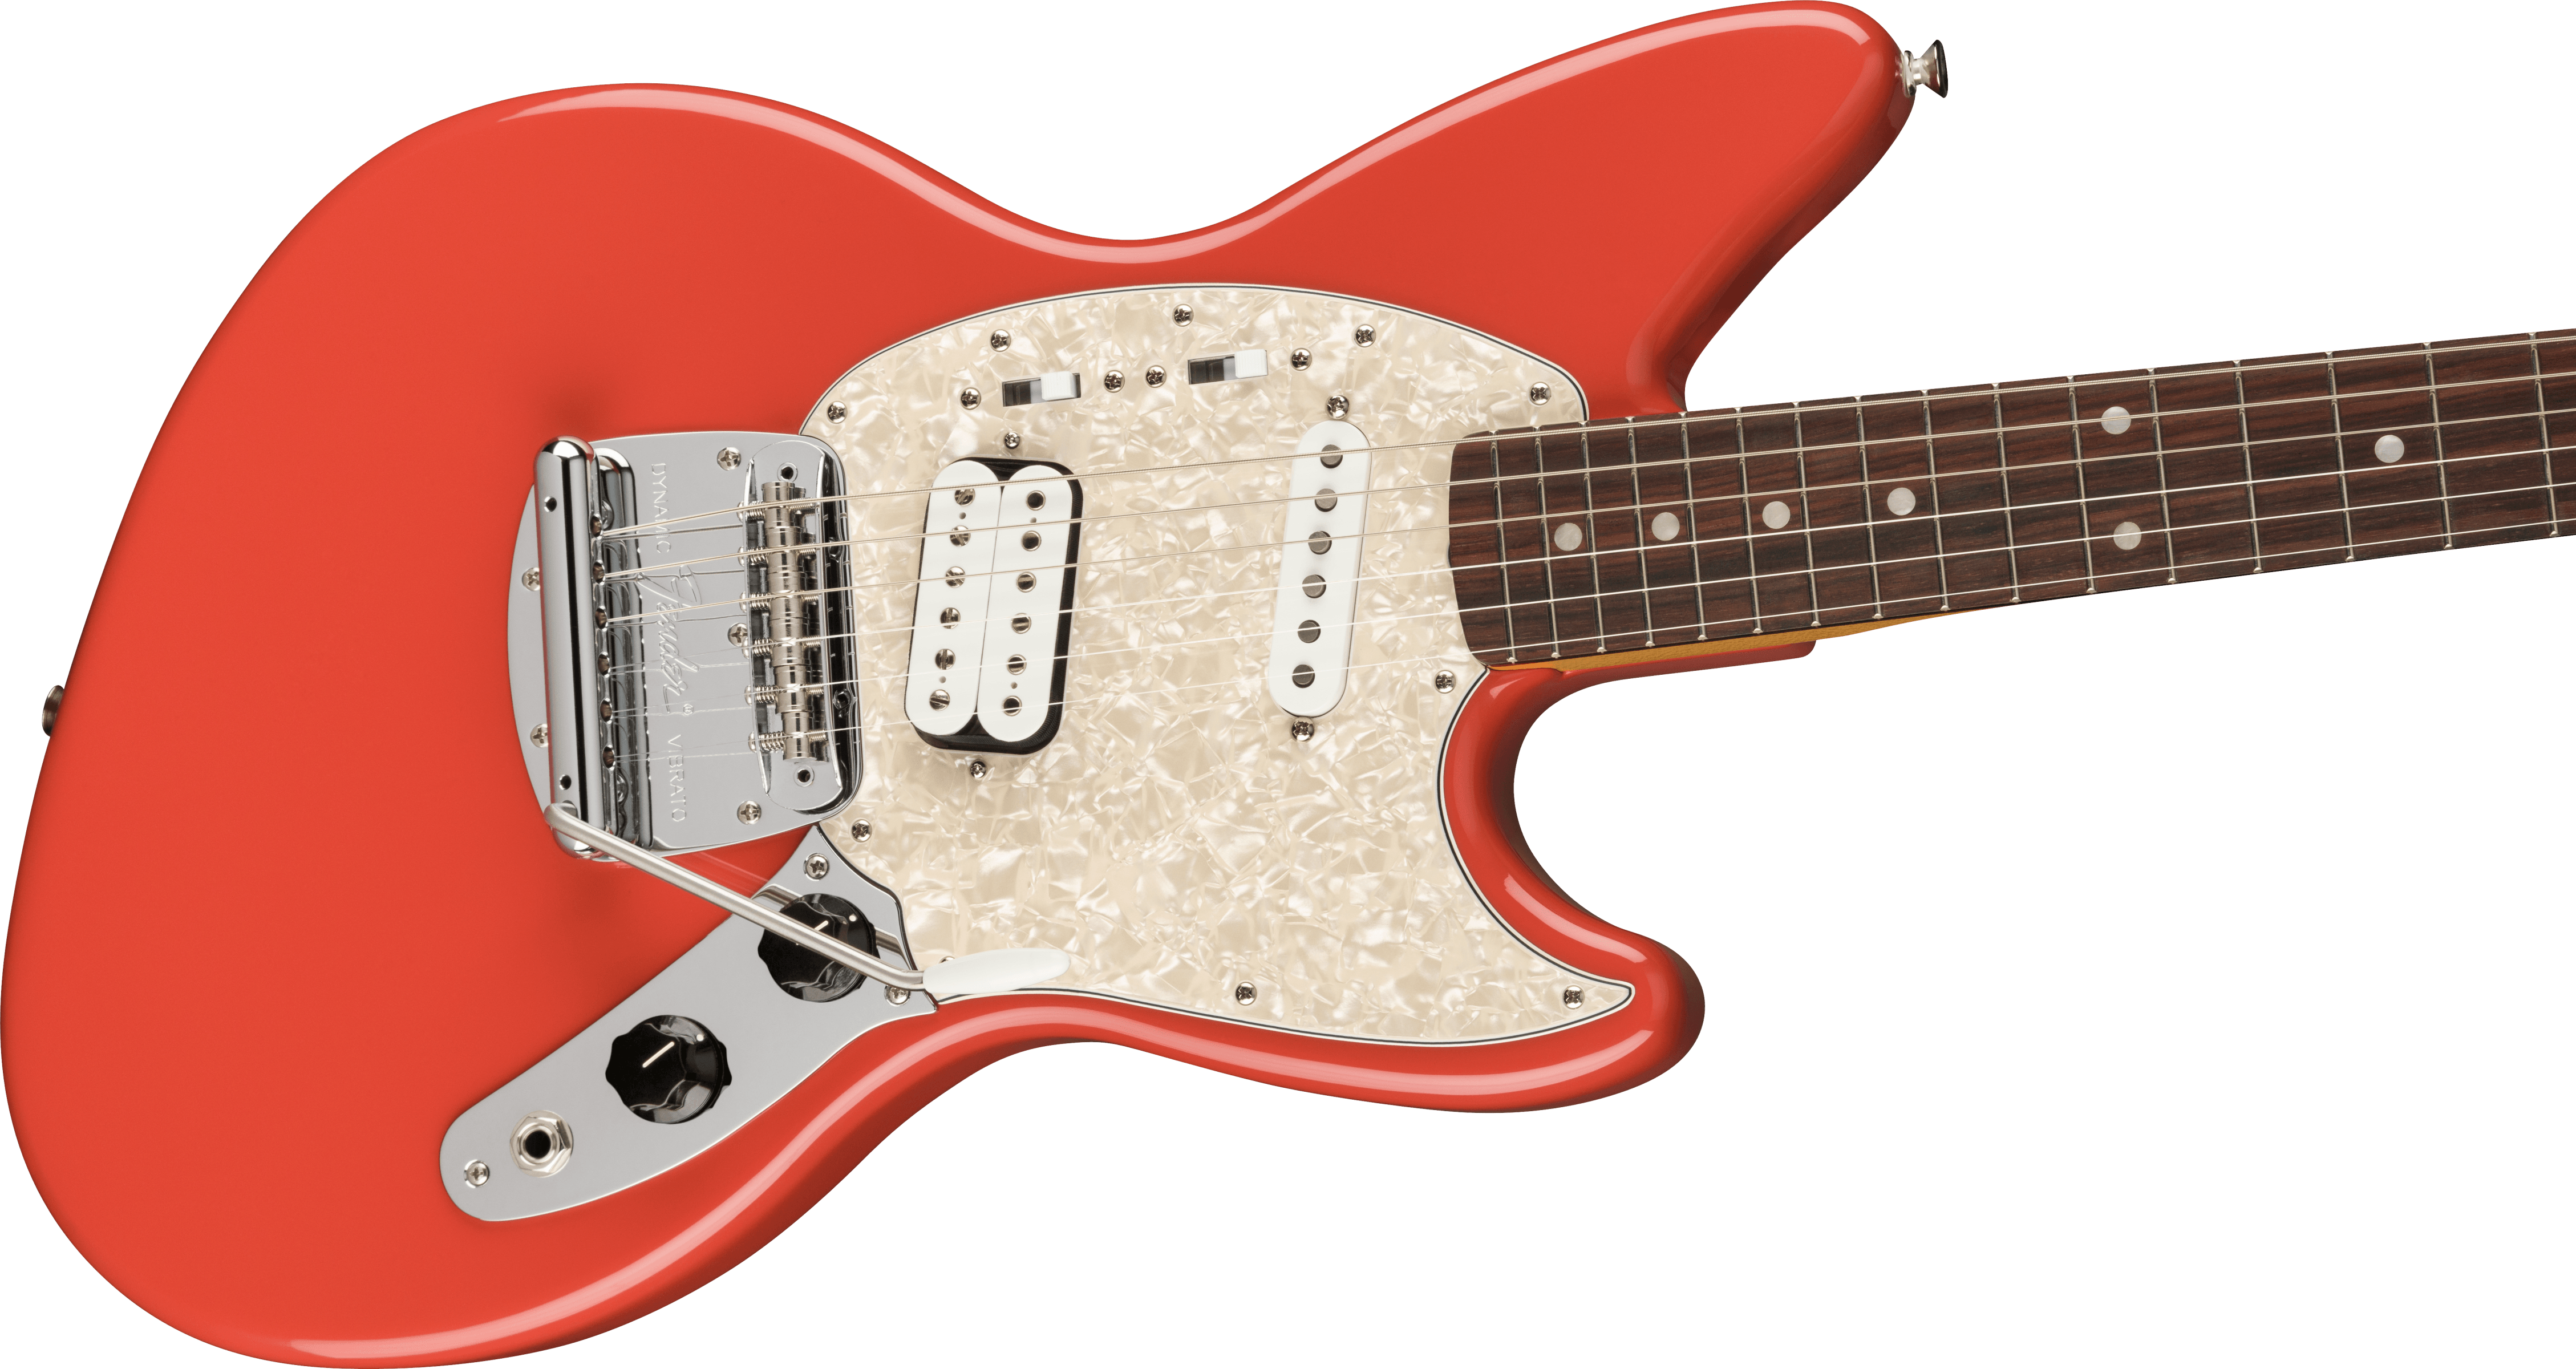 Fender Jag-stang Kurt Cobain Artist Hs Trem Rw - Fiesta Red - Retro rock electric guitar - Variation 3